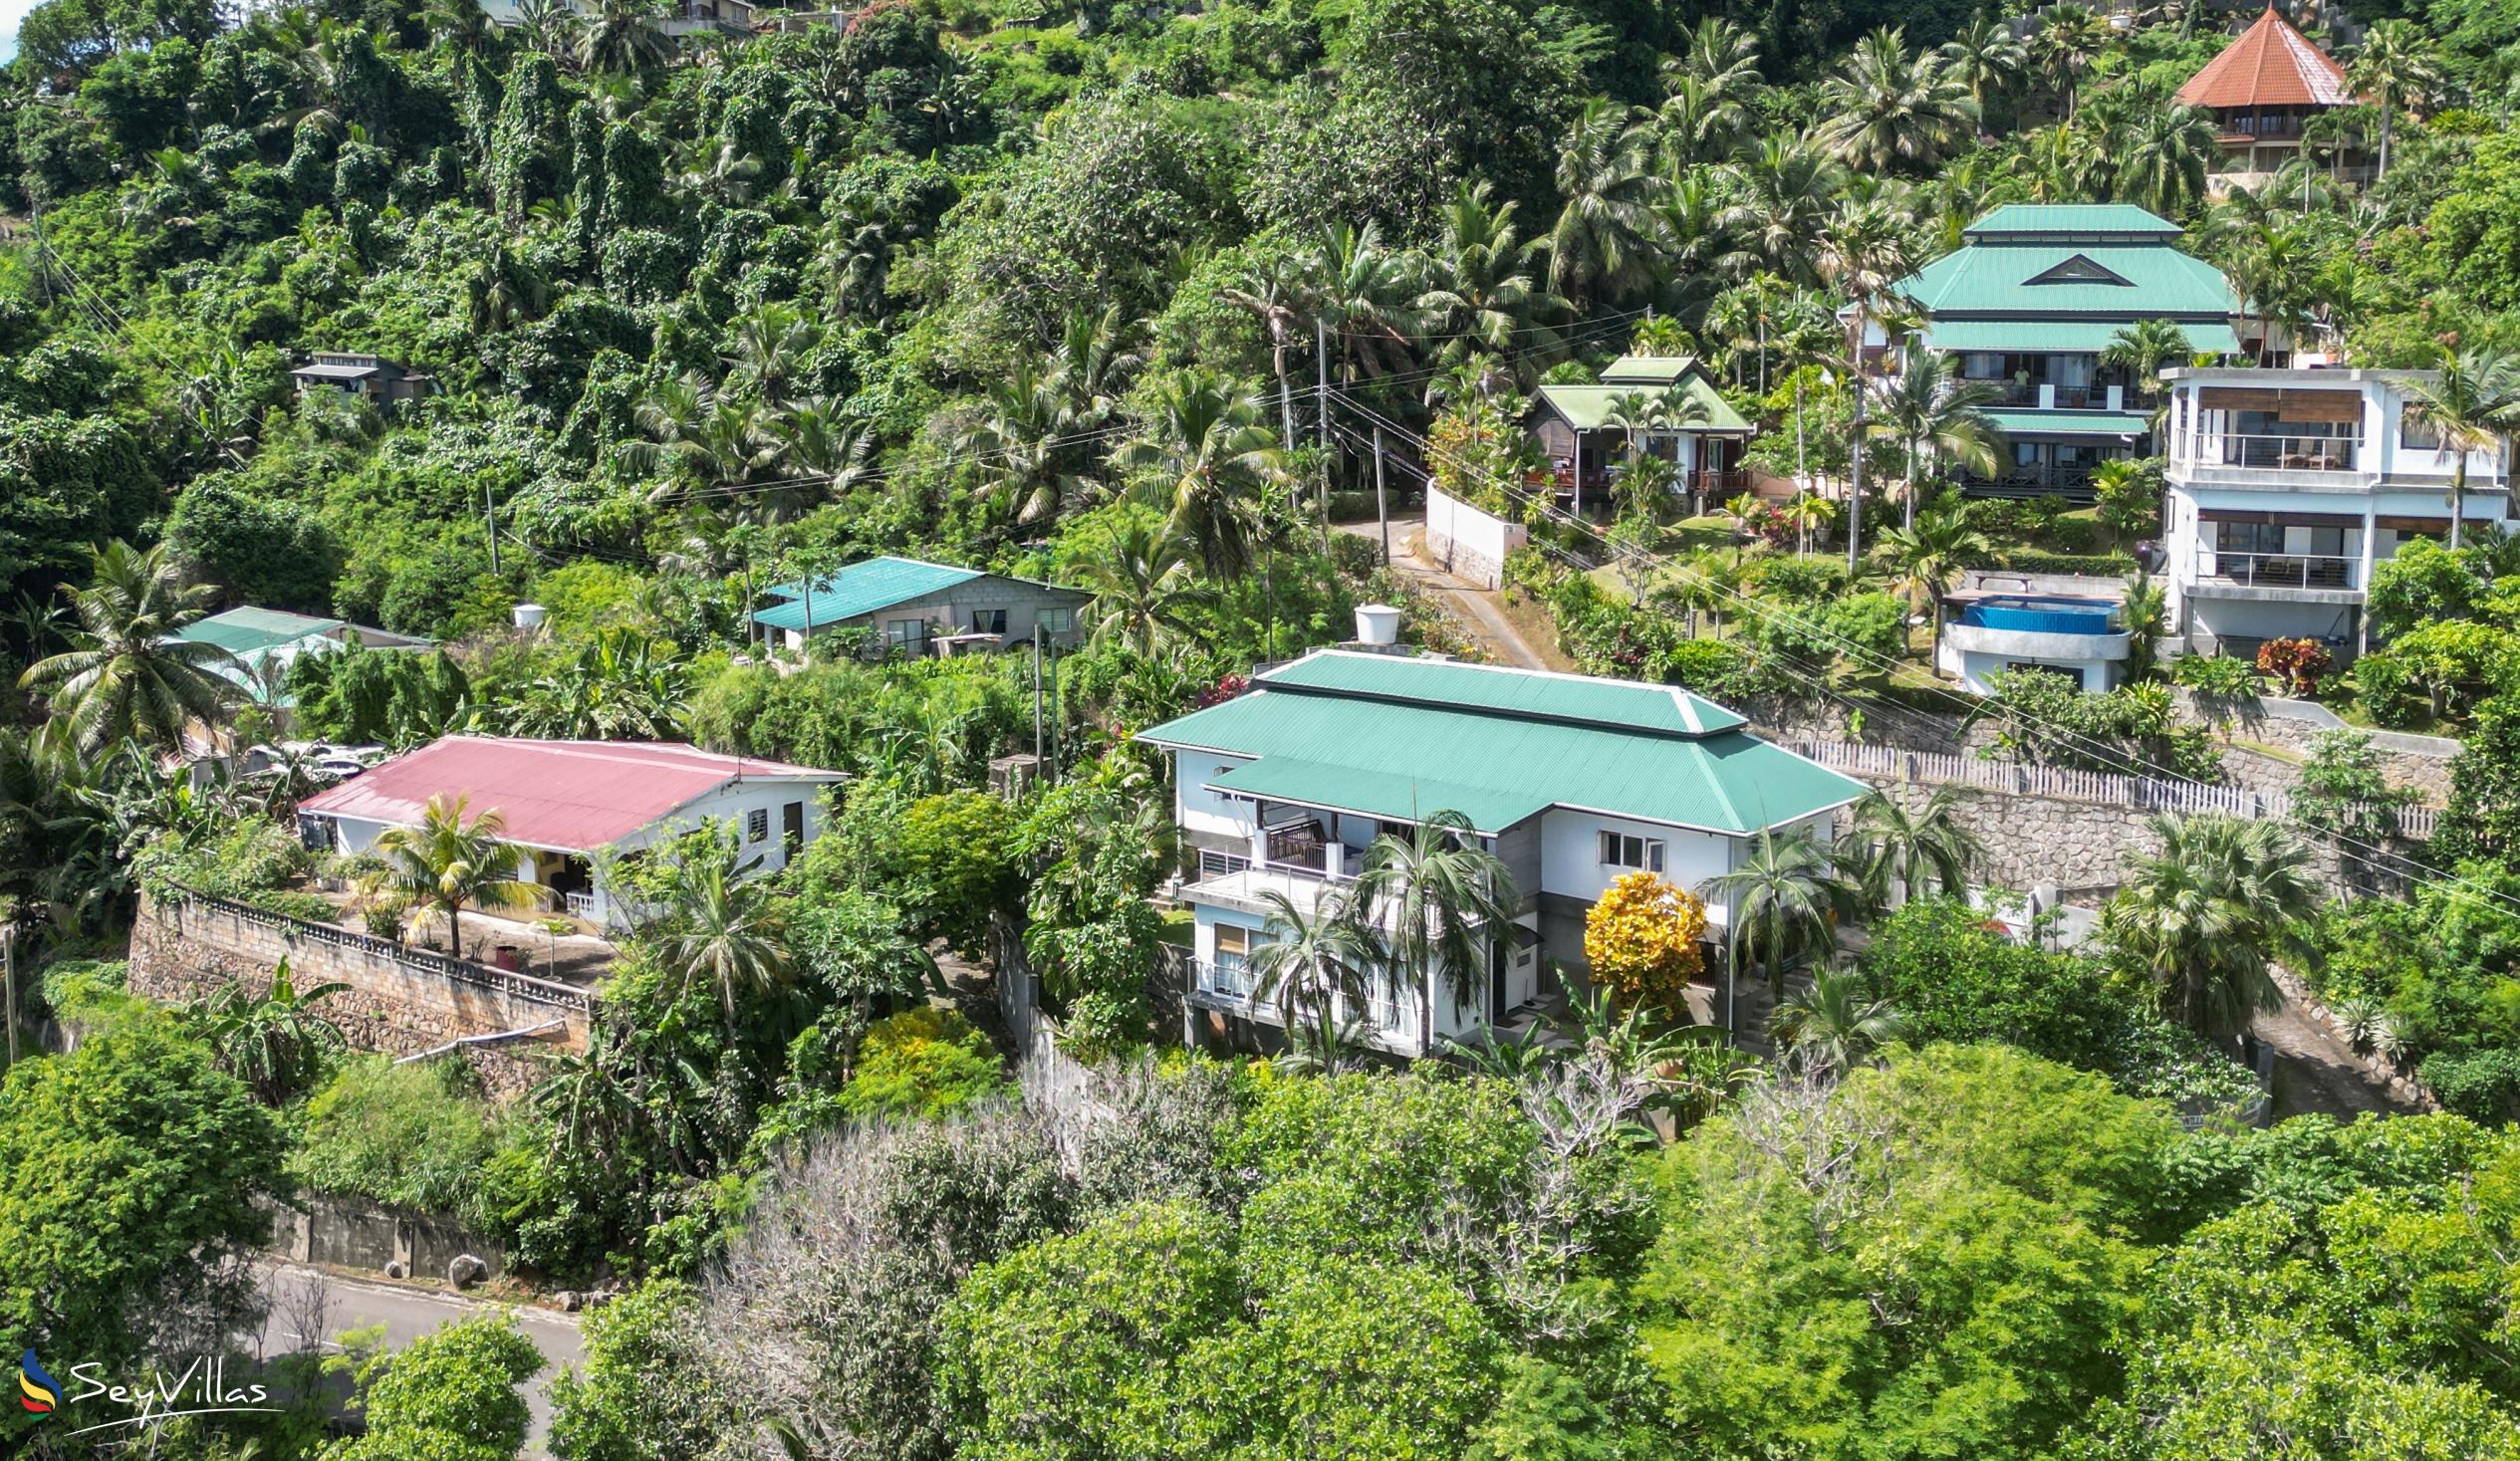 Photo 58: Chalets Bougainville - Outdoor area - Mahé (Seychelles)